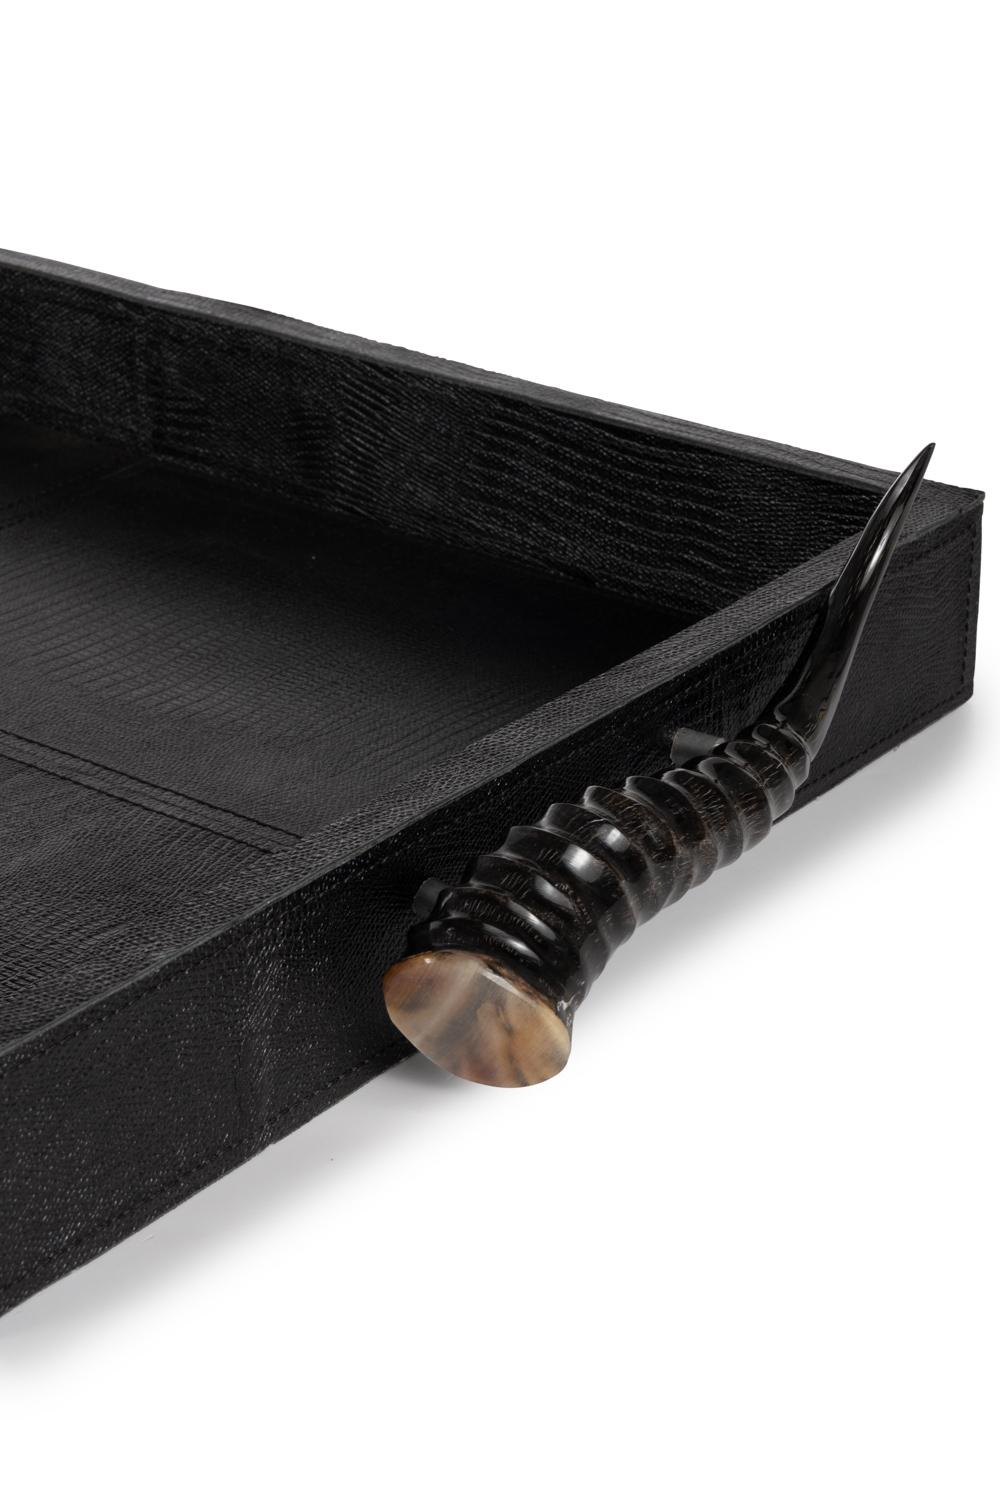 Leather Rectangle Tray / Springbok Horn Handles